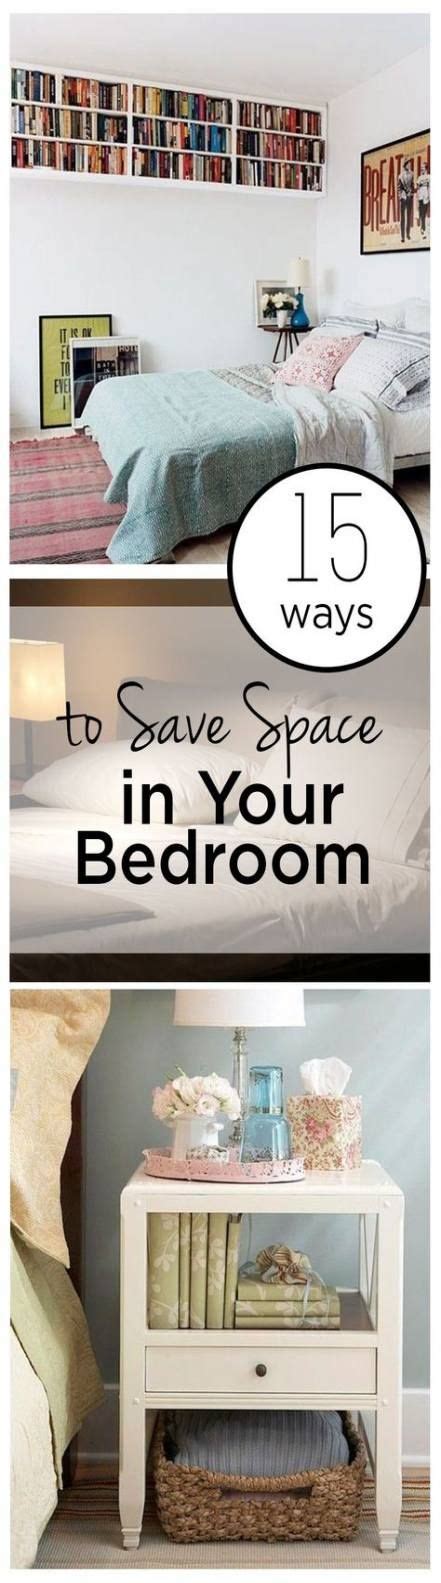 ideas  bedroom organization diy space saving fit diy bedroom